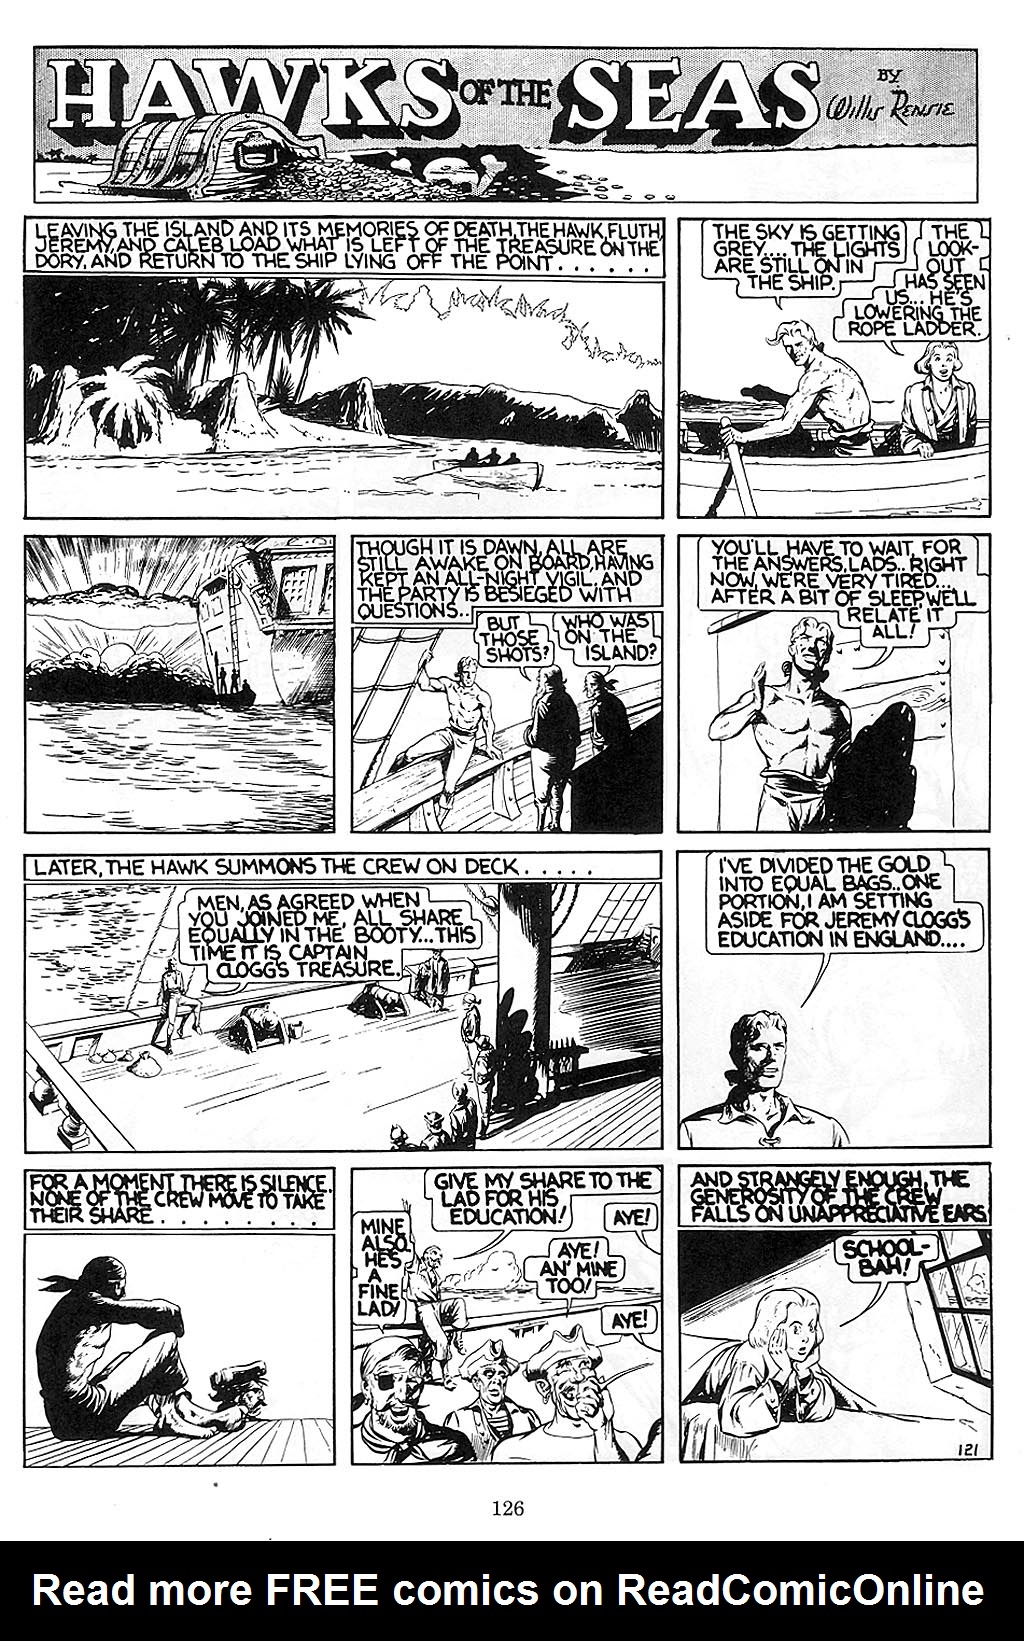 Read online Will Eisner's Hawks of the Seas comic -  Issue # TPB - 127